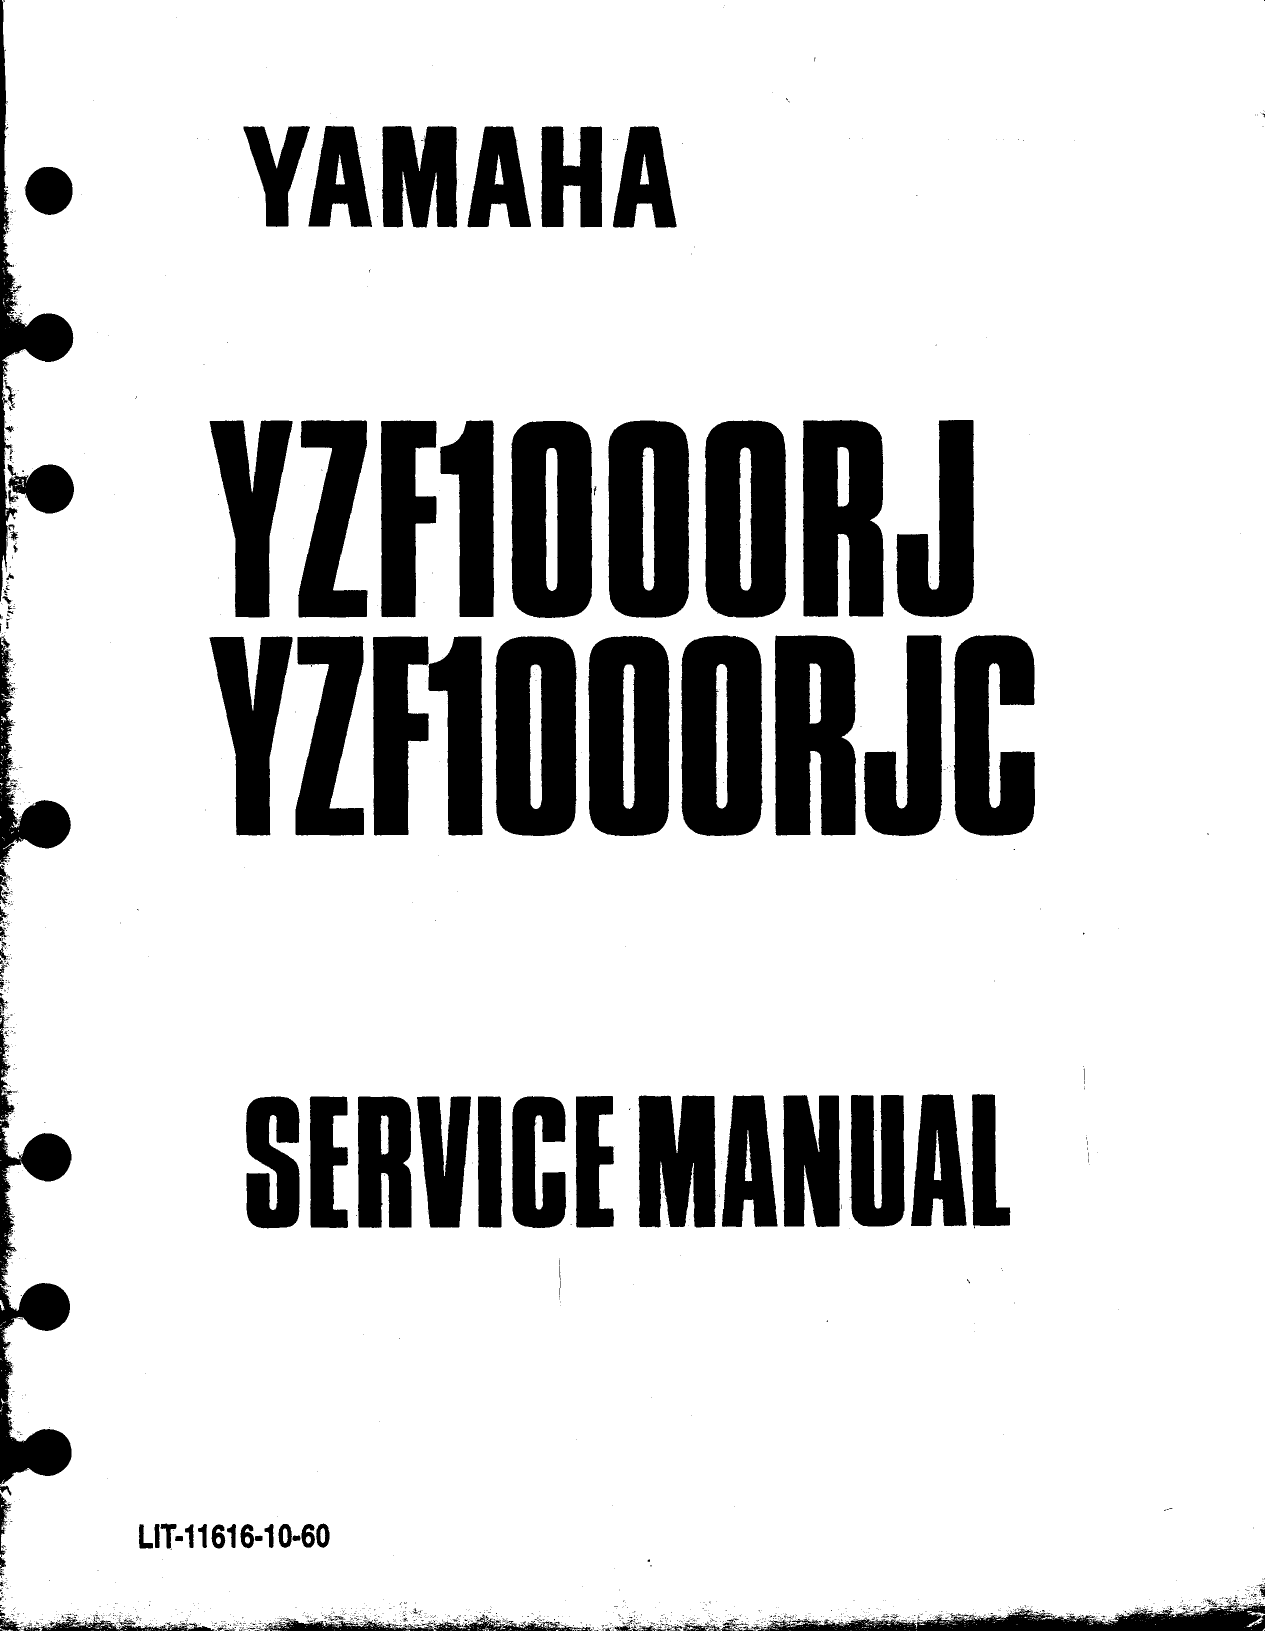 1996-2003 Yamaha YZF 1000 Thunderace service manual Preview image 1